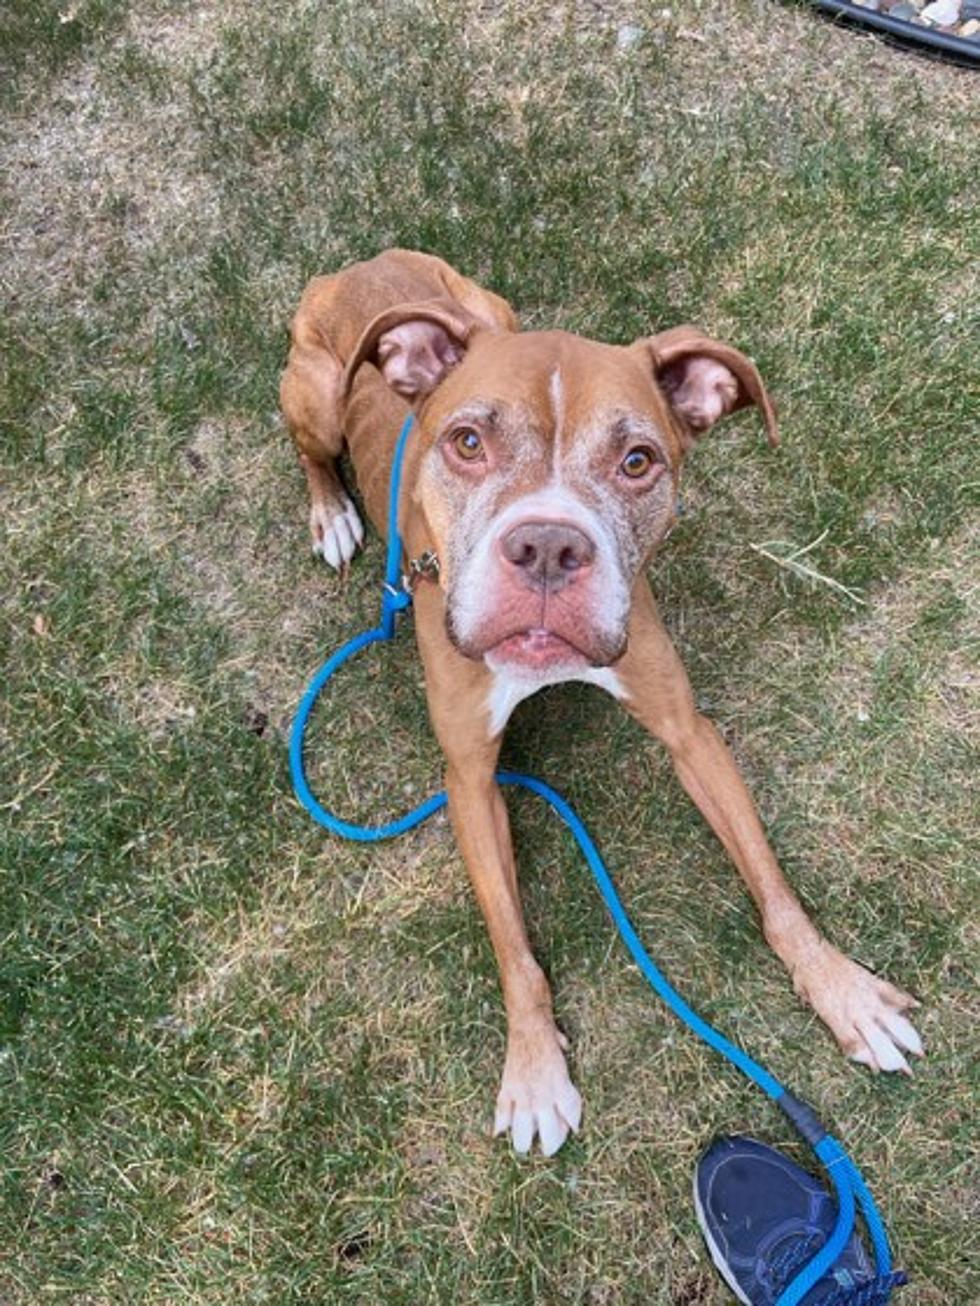 Adopt a Senior Dog &#8211; Meet Brodie at the TCHS